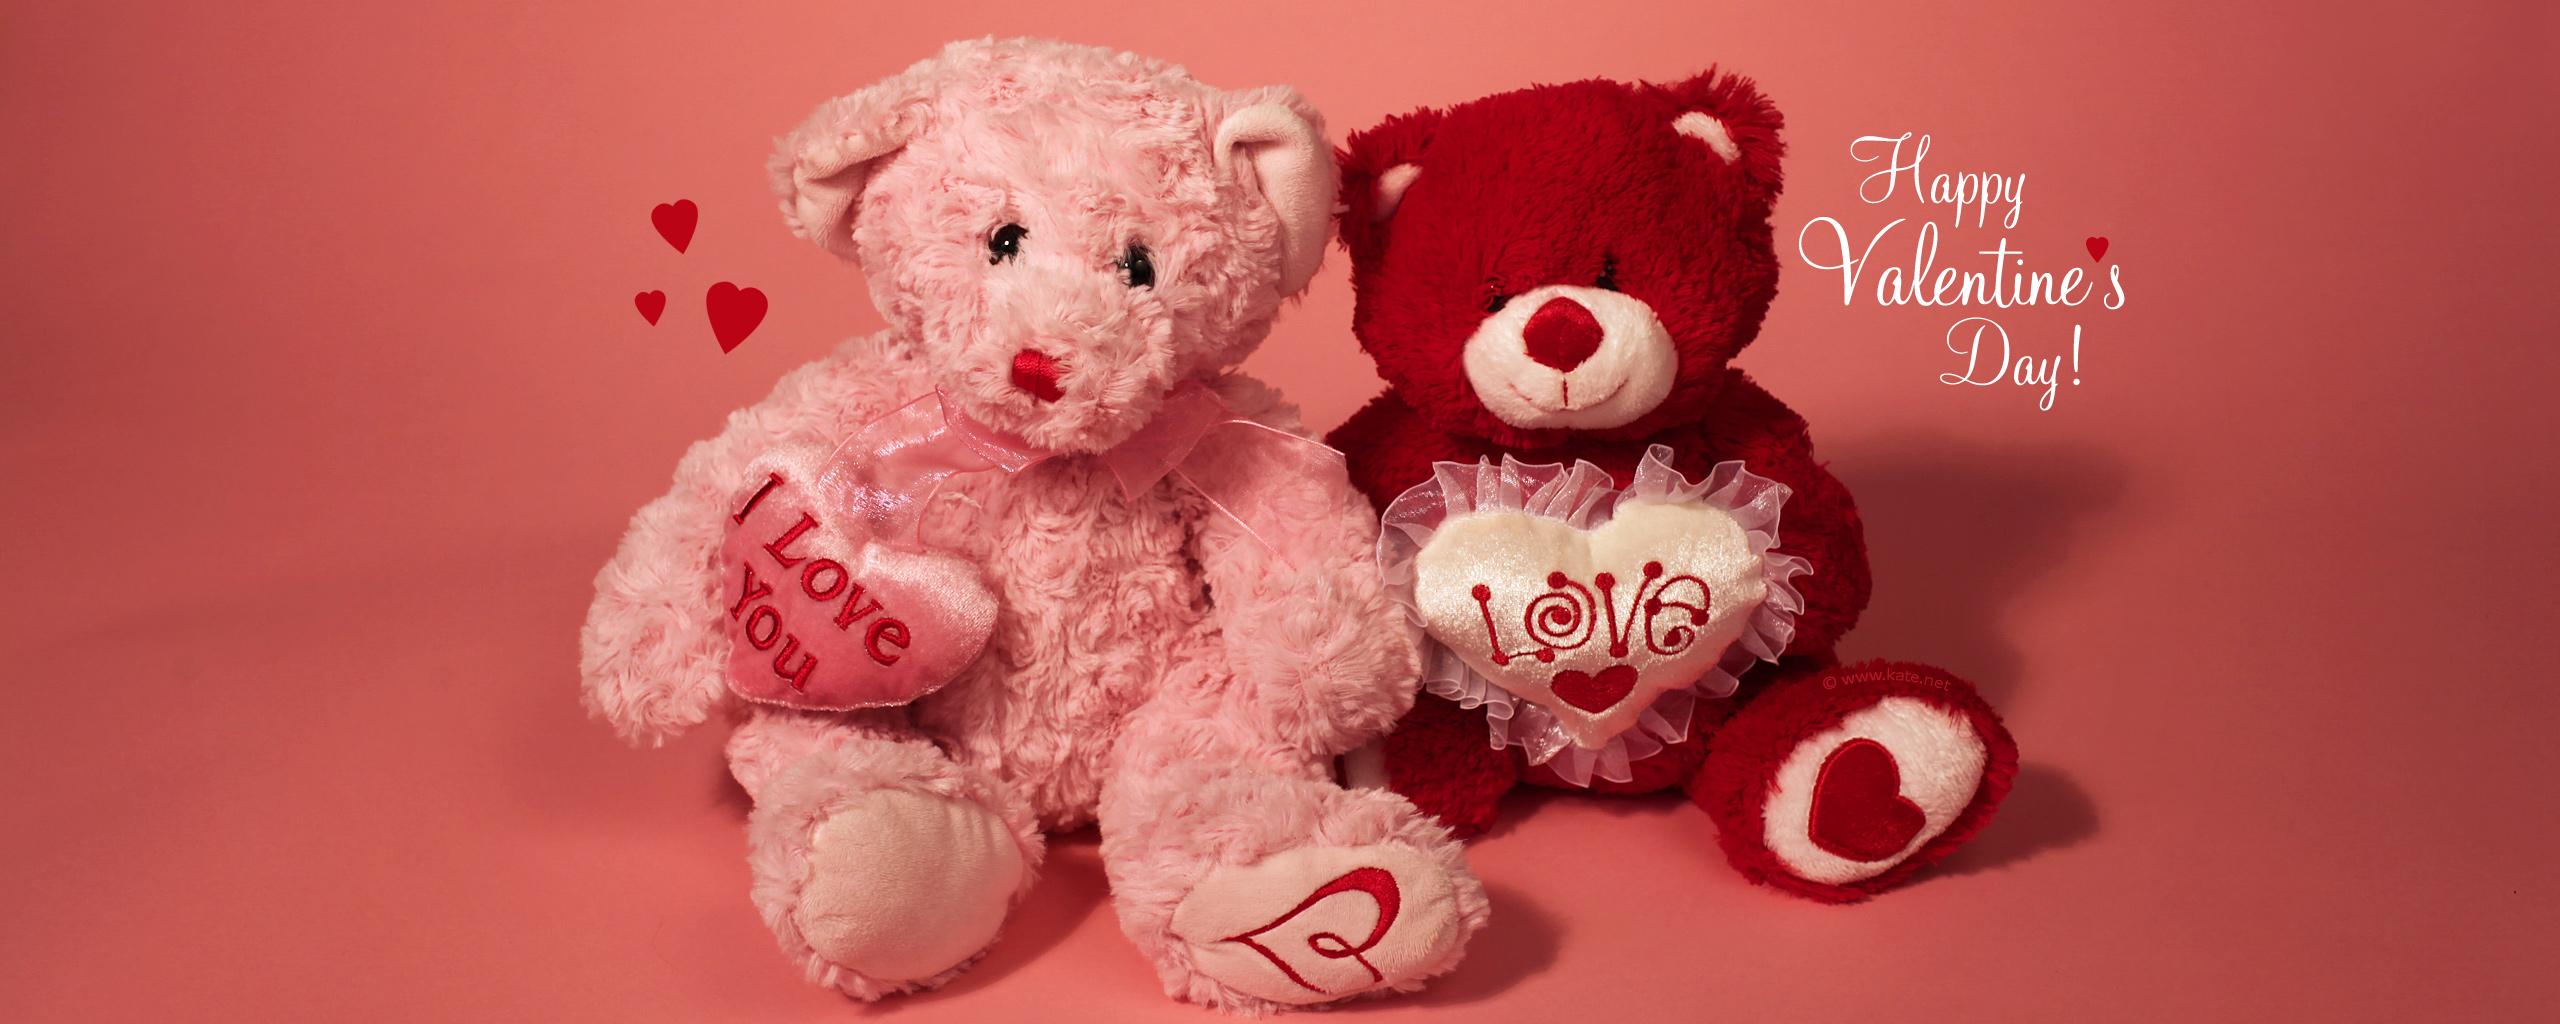 Download I love you my teddy bear - Happy Valentine's Day Dual 1280x10...